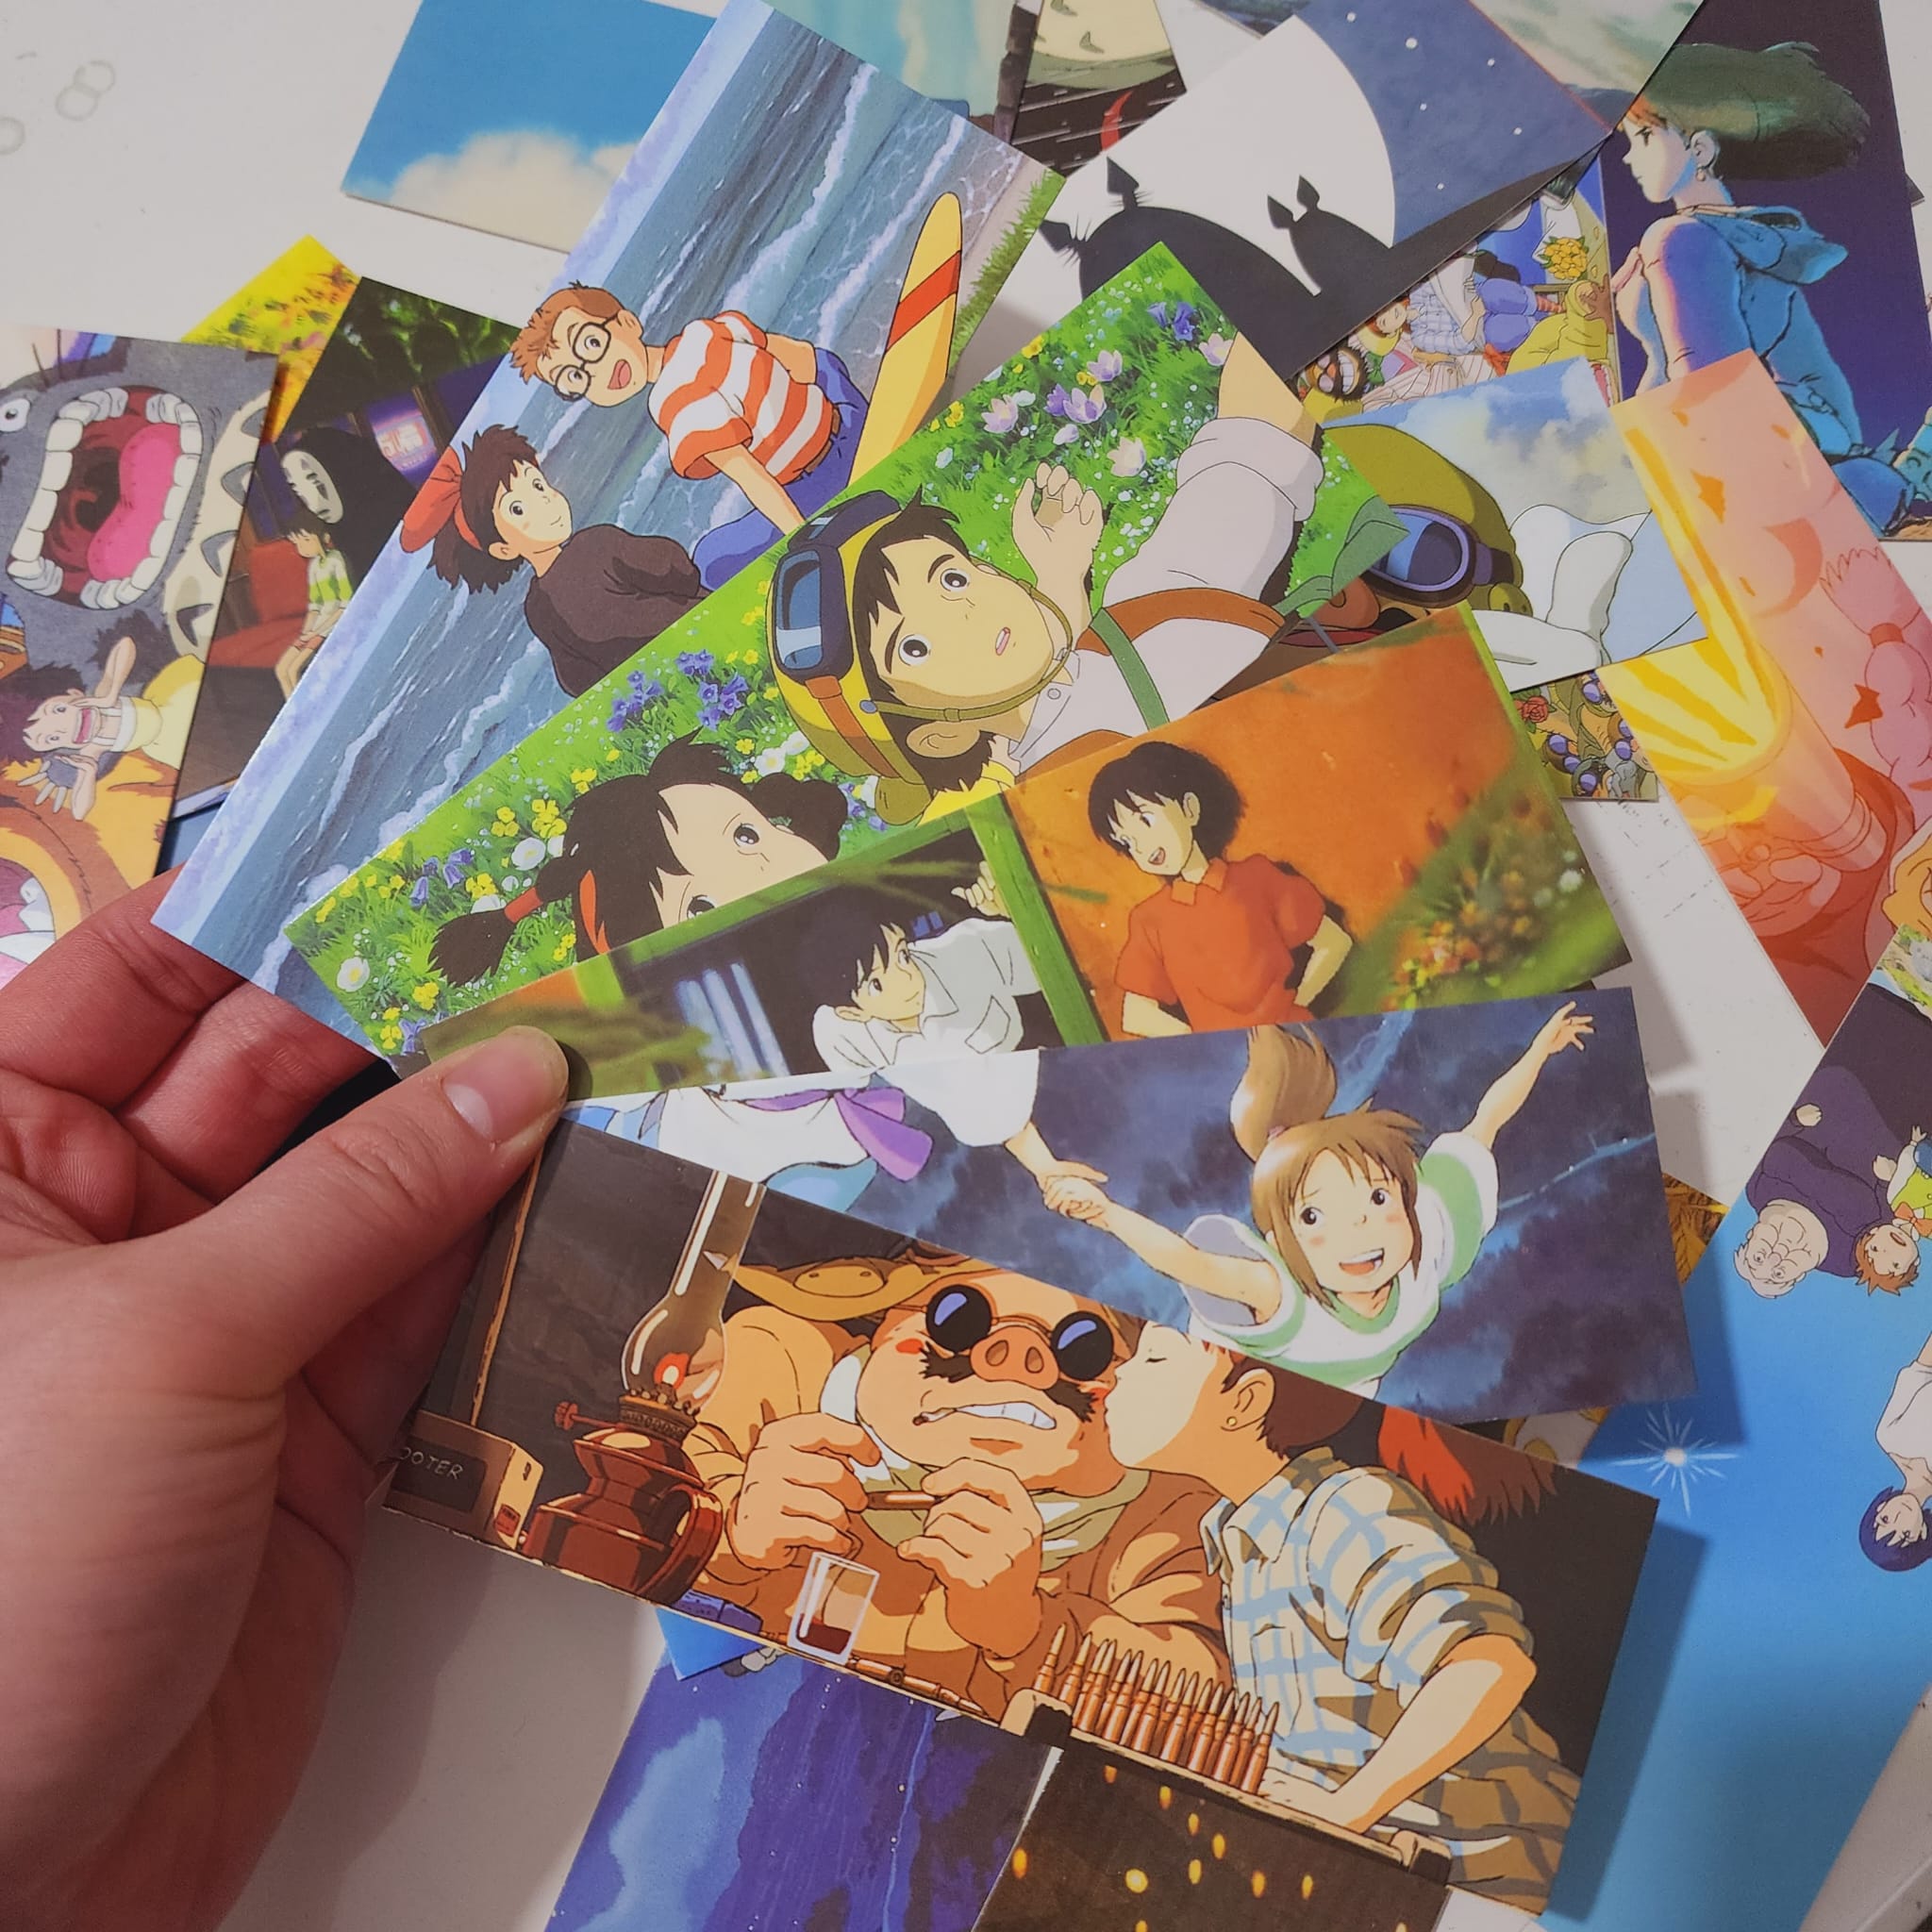 Studio Ghibli - 100 Collectible Postcards